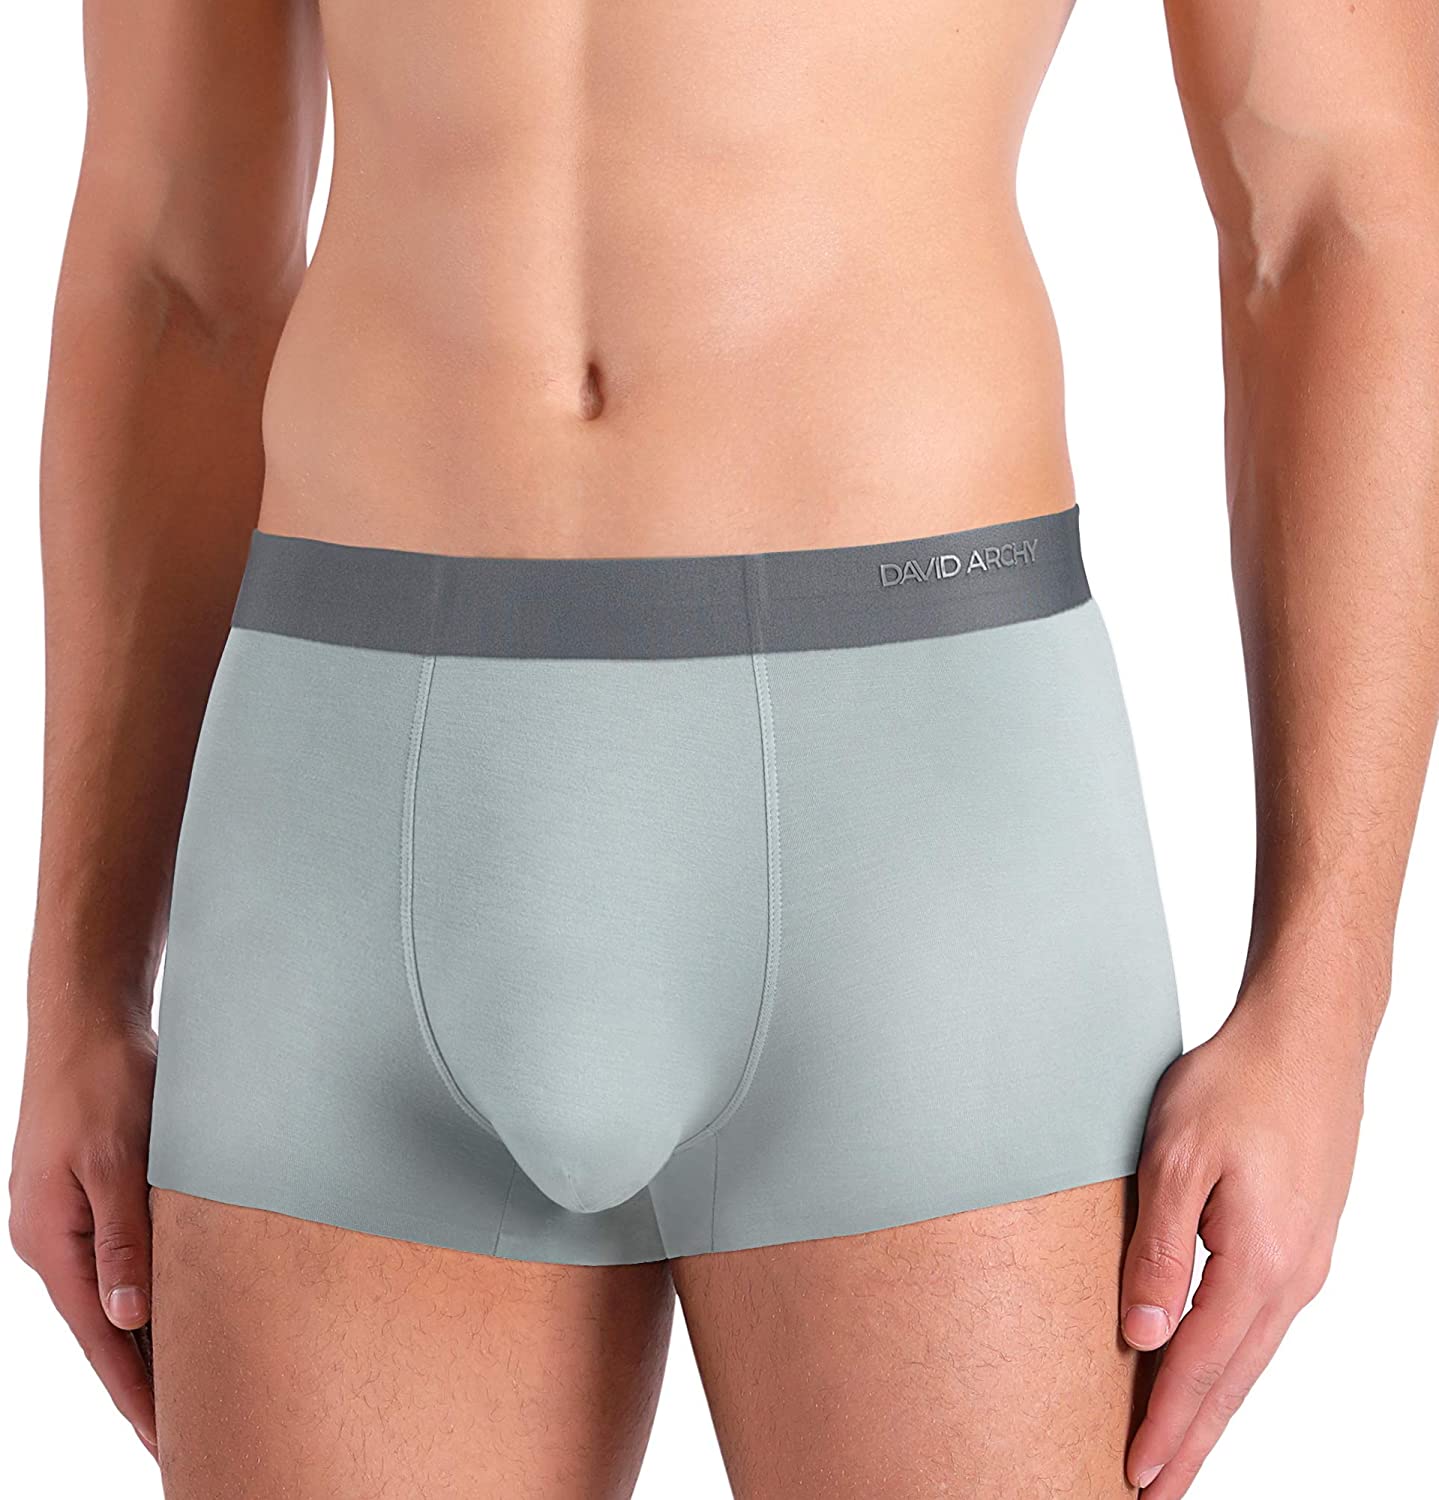 david archy underwear